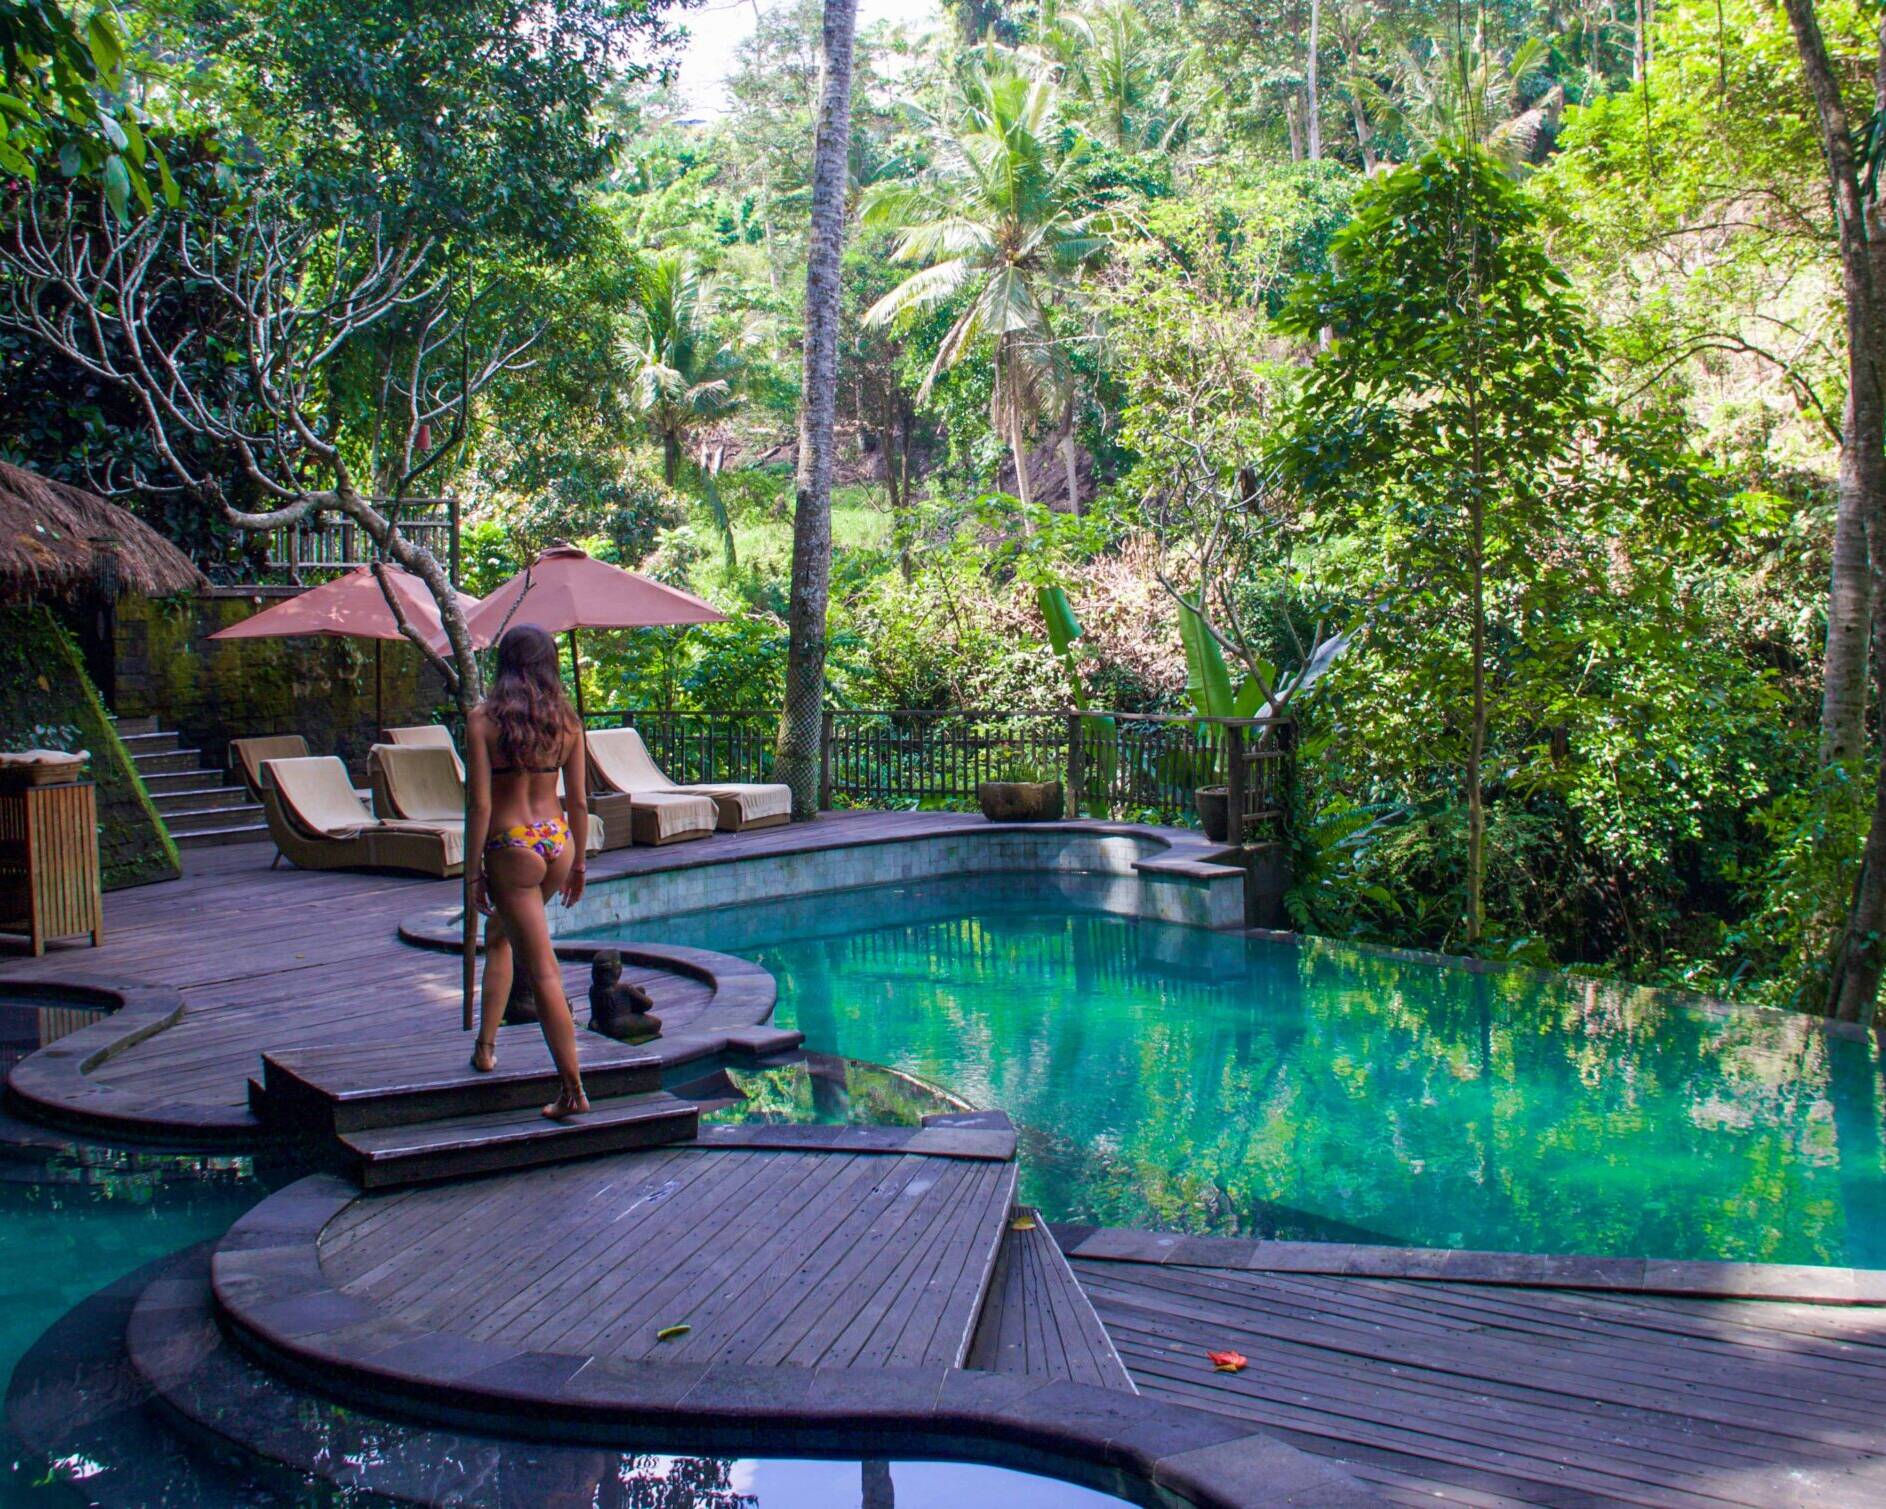 Infinity pool at Svarga Loka resort in Ubud